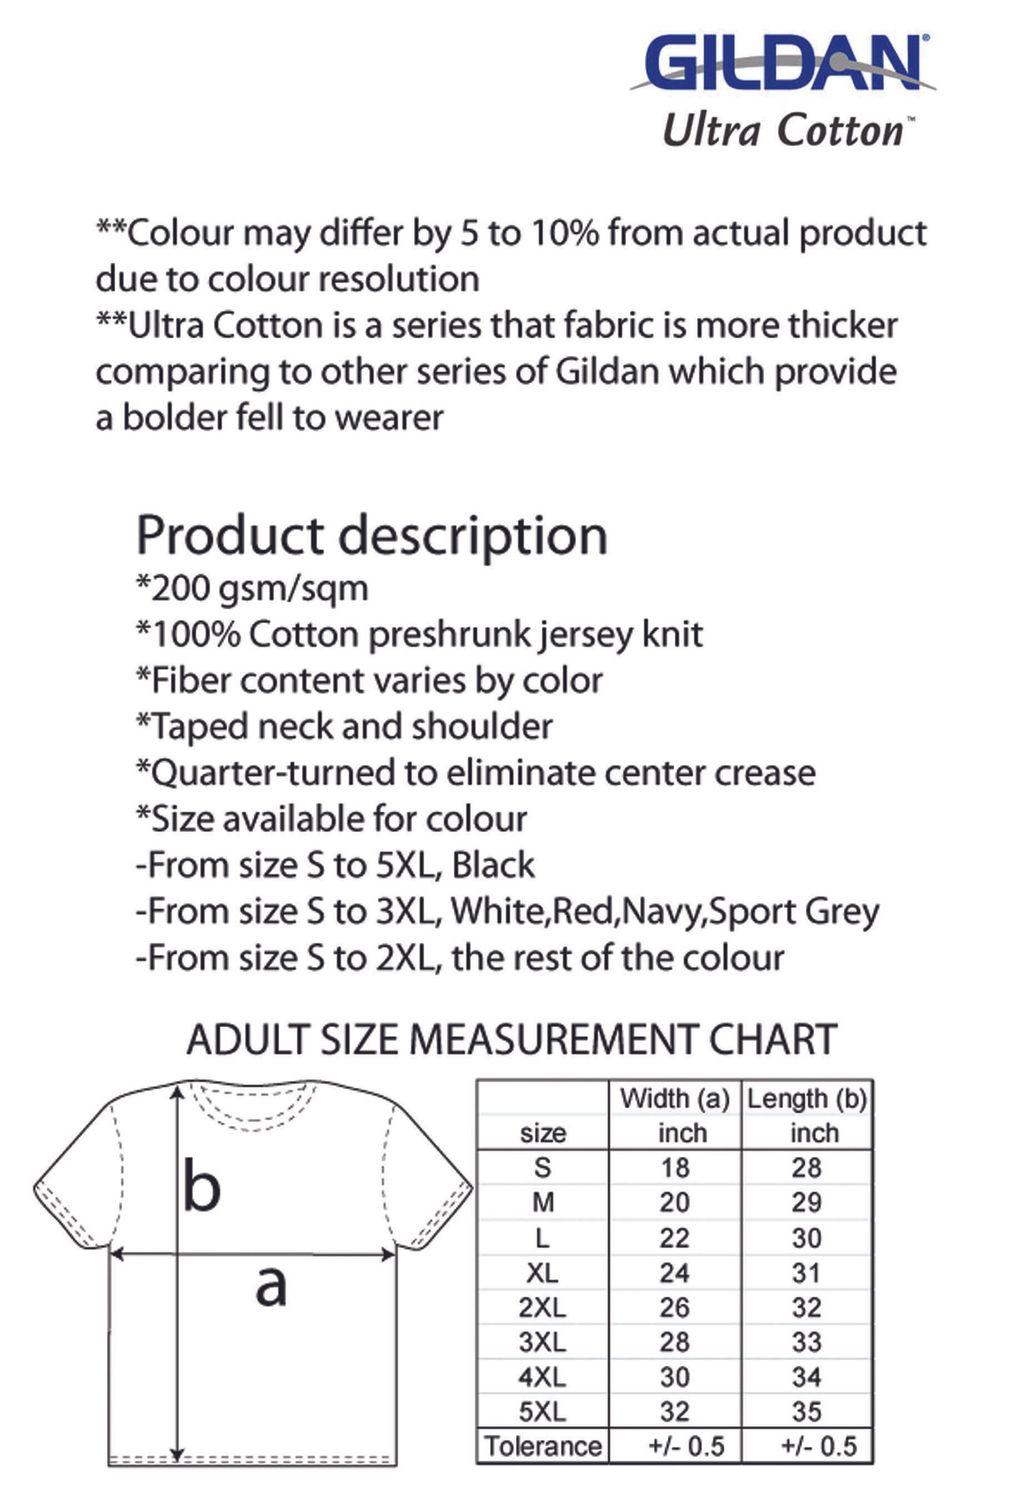 shirt size measurement.jpg